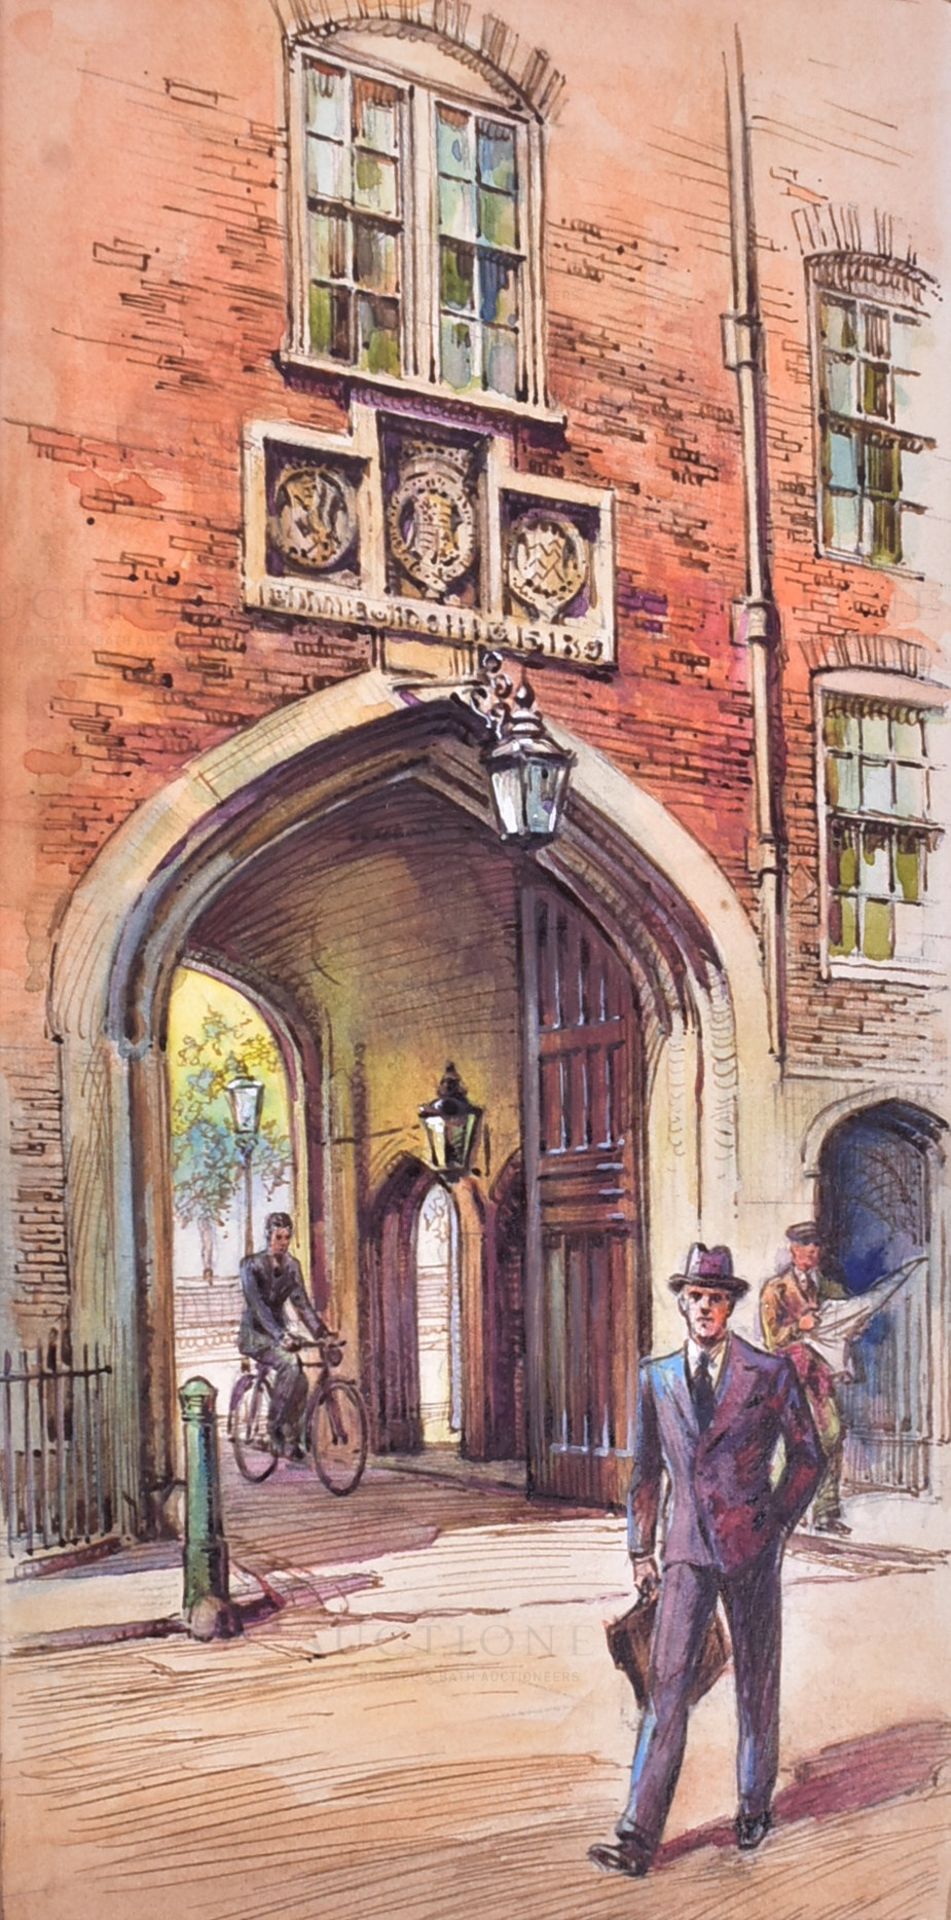 MARDON SON & HALL - LONDON - ORIGINAL CIGARETTE CARD ARTWORK - Image 4 of 5